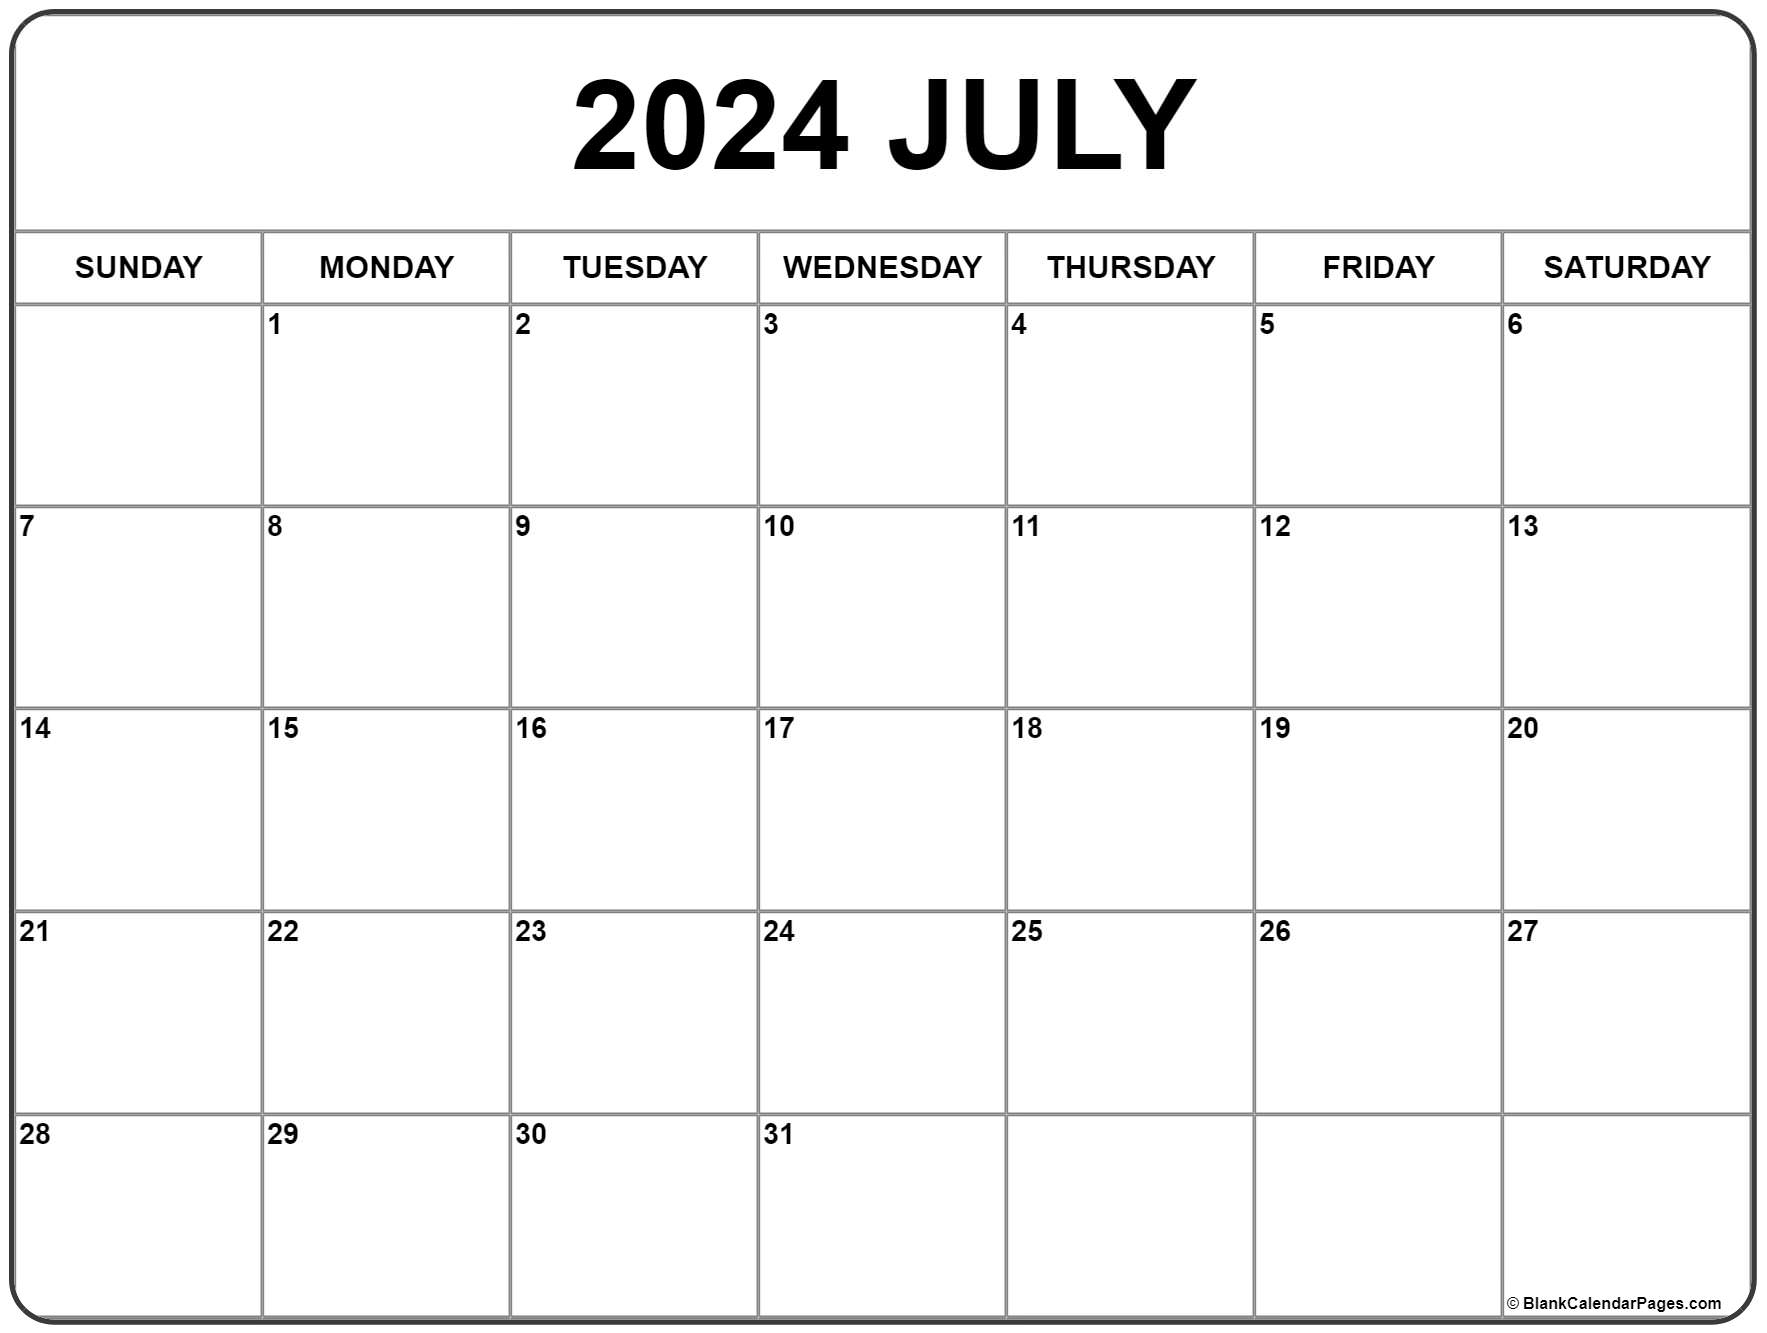 Calendar 2021 July July 2021 calendar | free printable monthly calendars